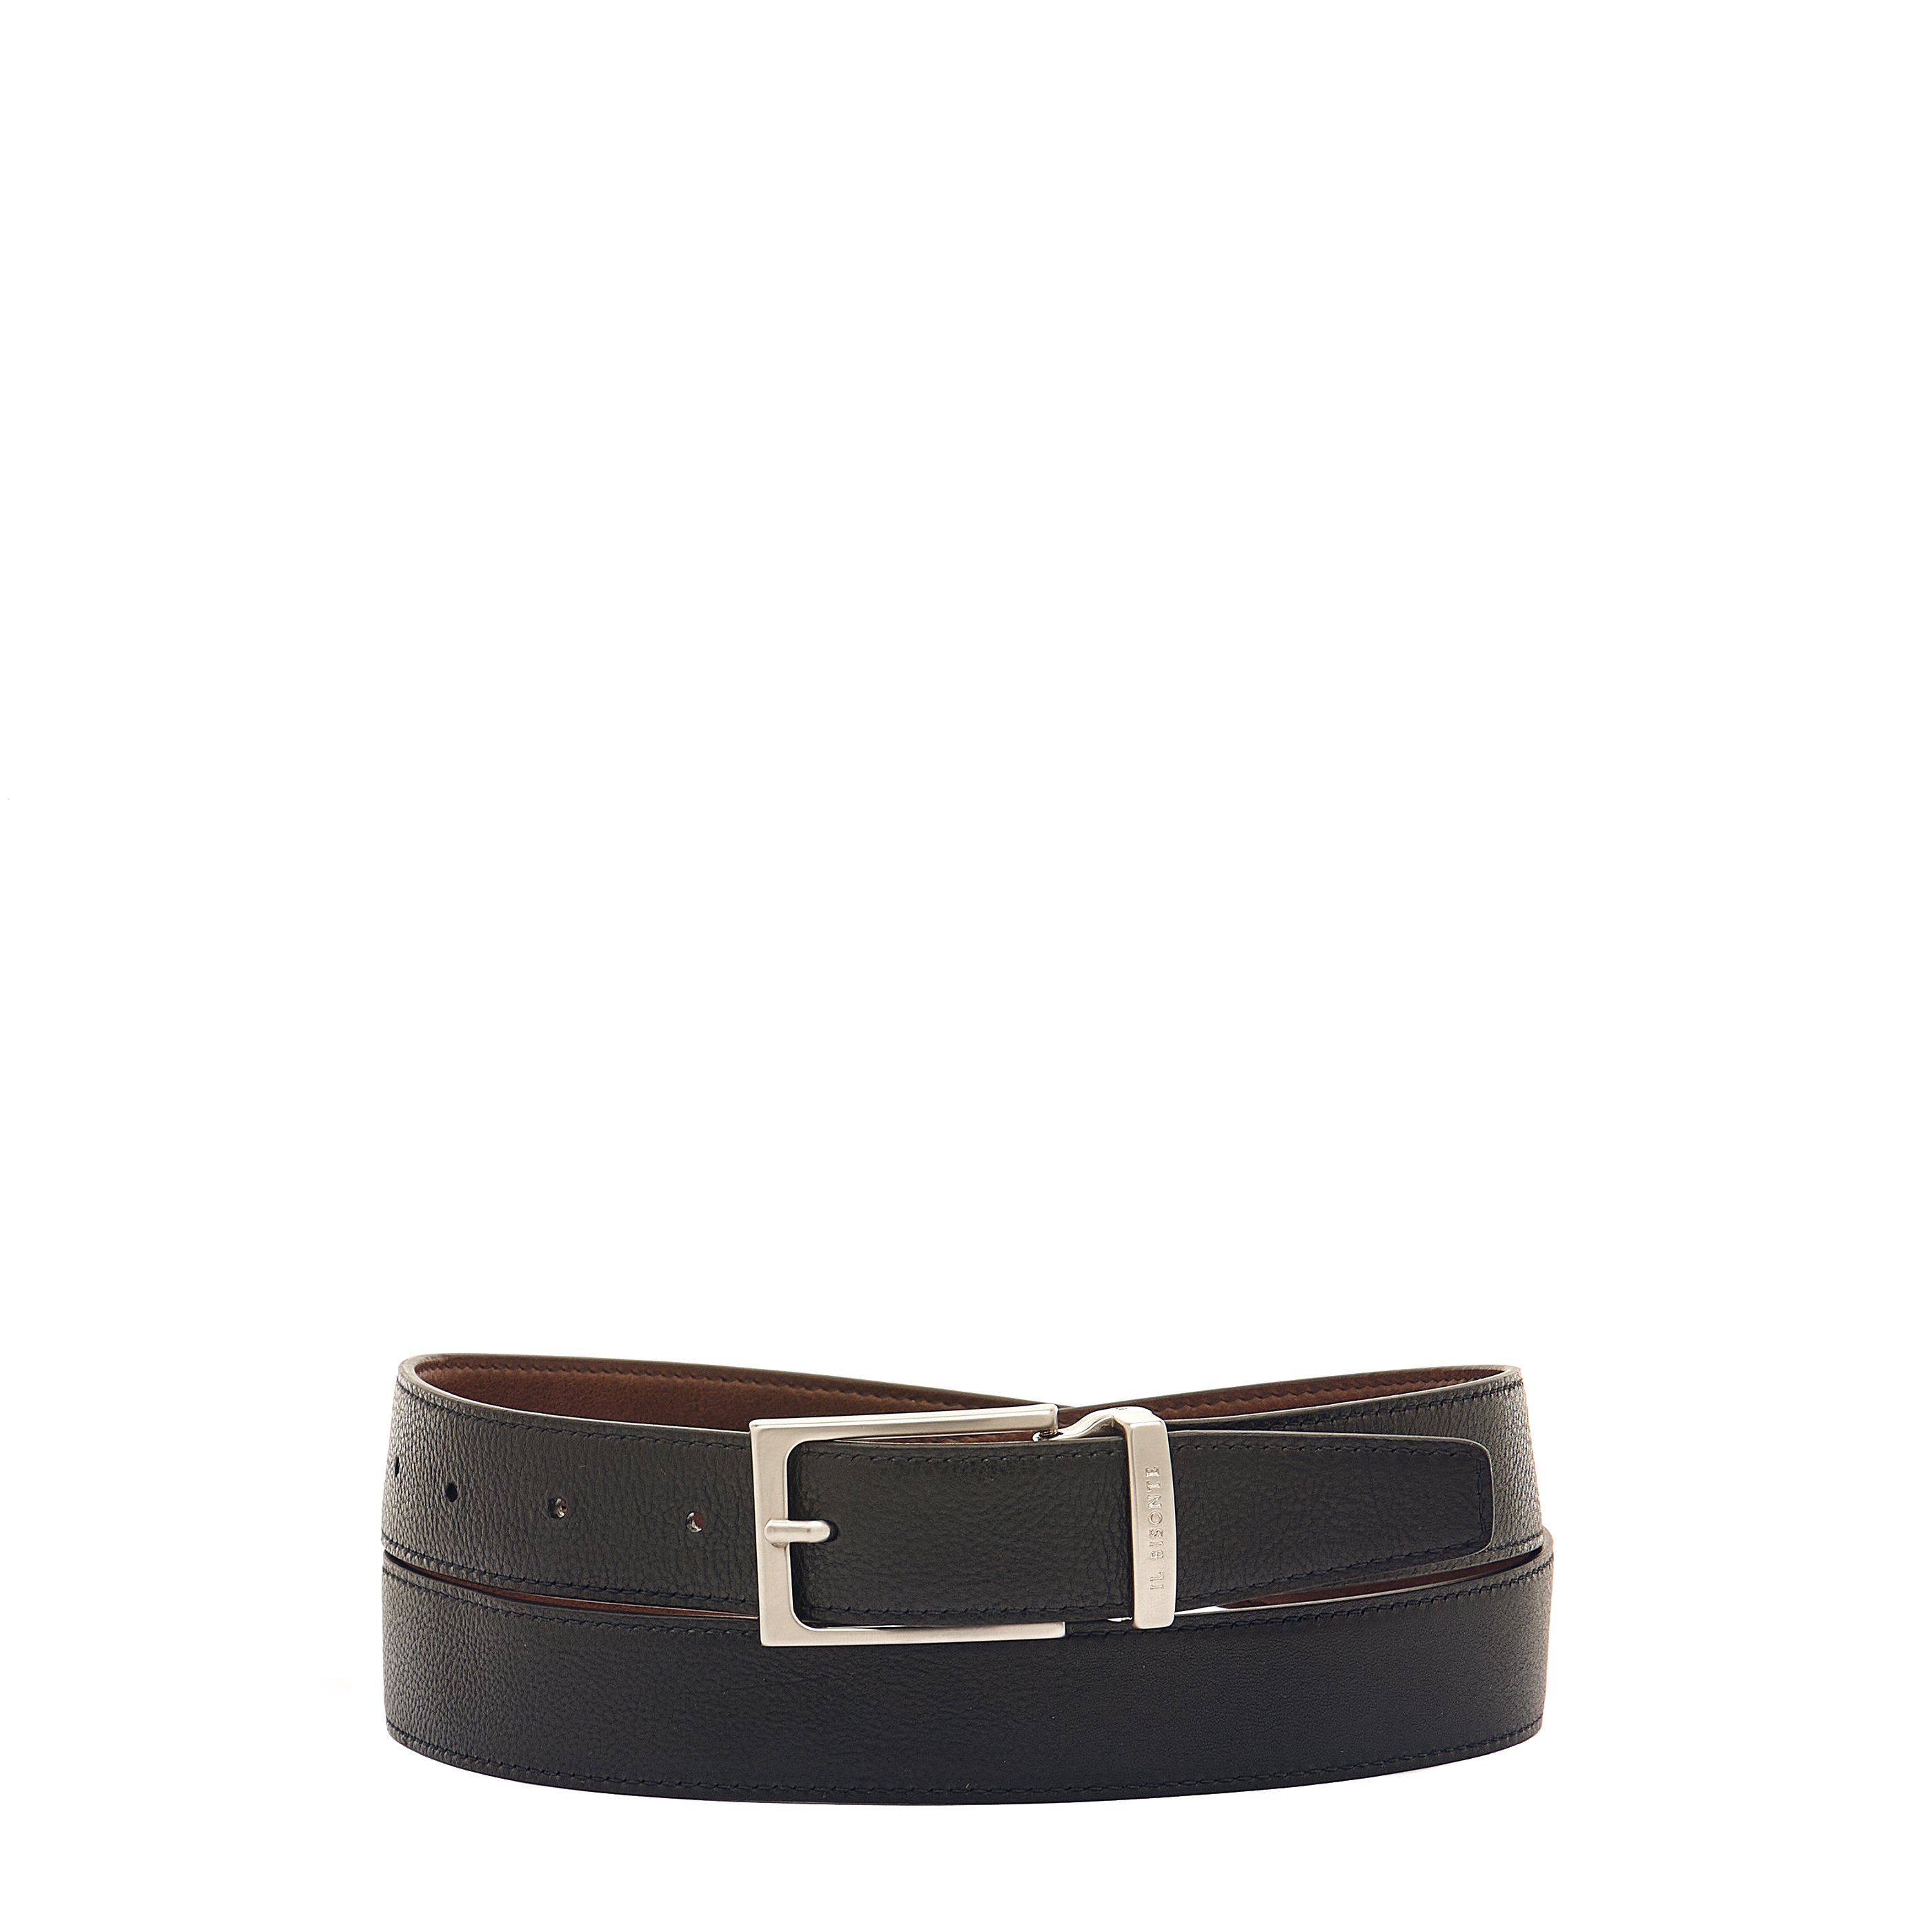 Cestello | Men's Belt in Vintage Leather color Coffee / Black